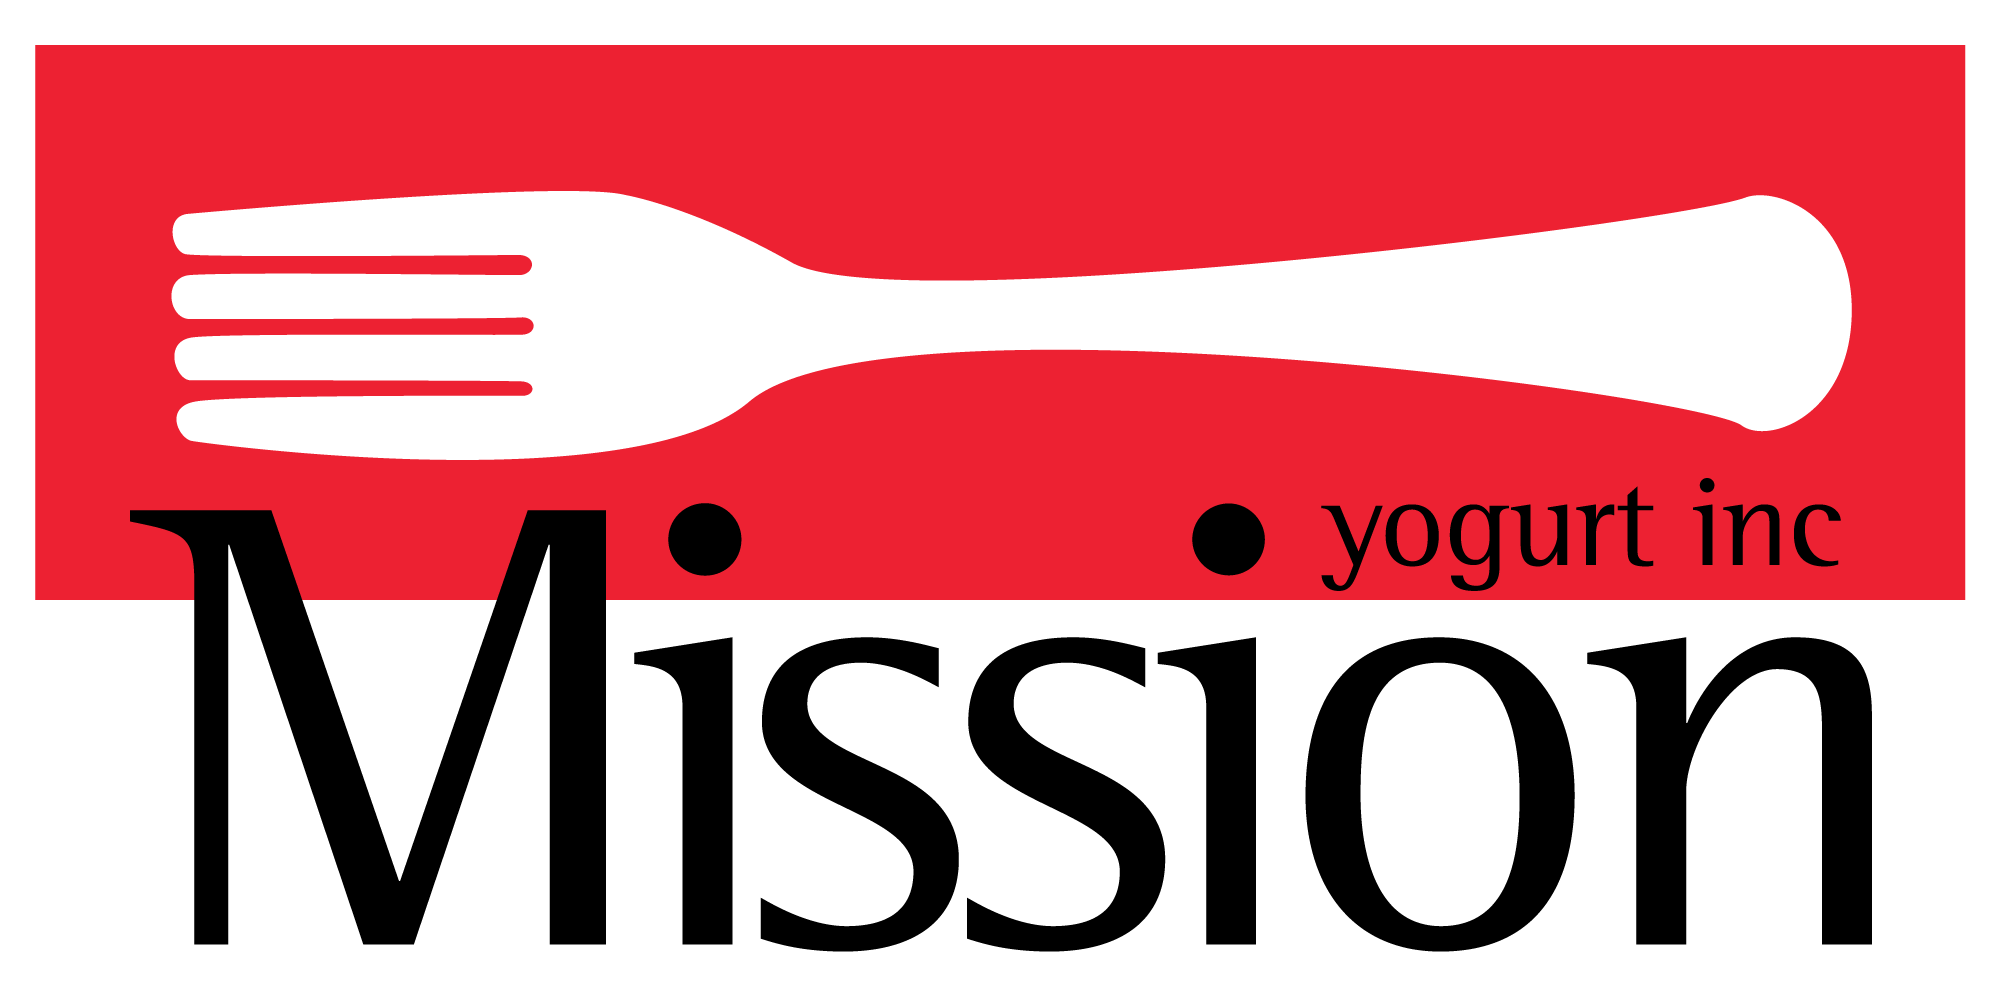 Mission Yogurt, Inc.